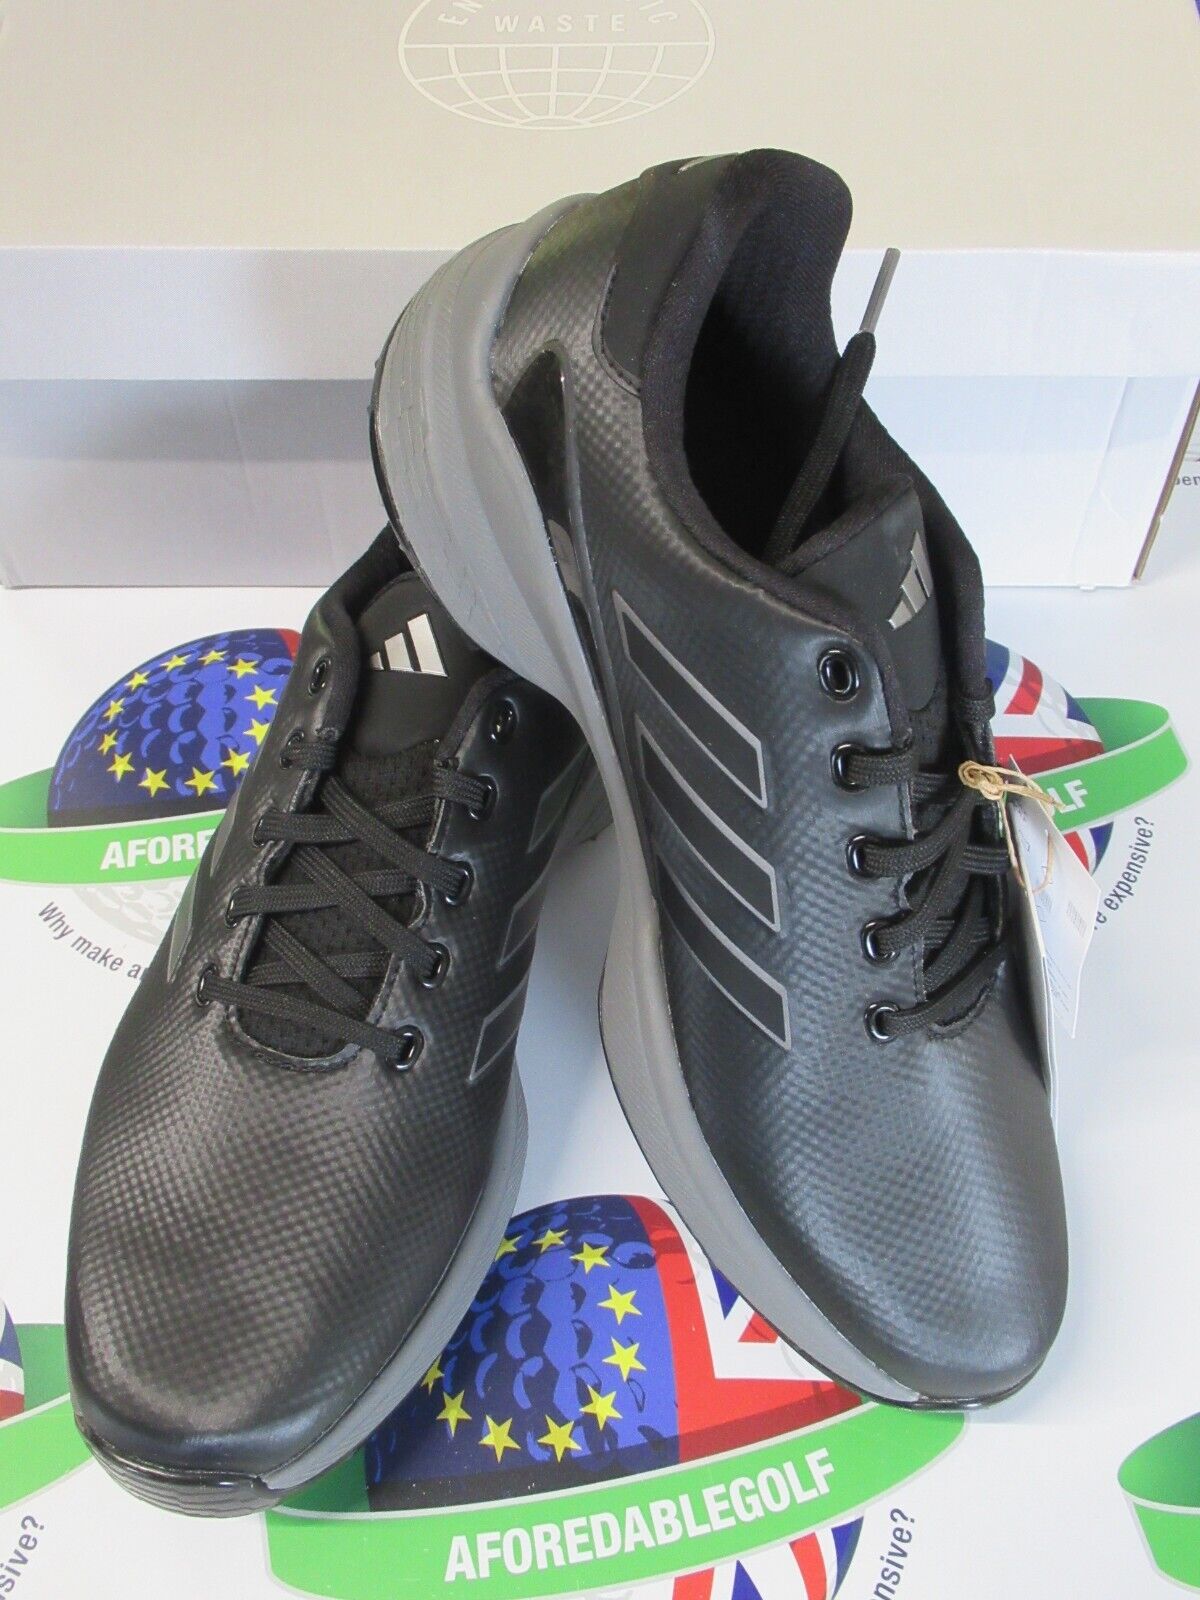 adidas zg23 waterproof golf shoes black/grey uk size 11